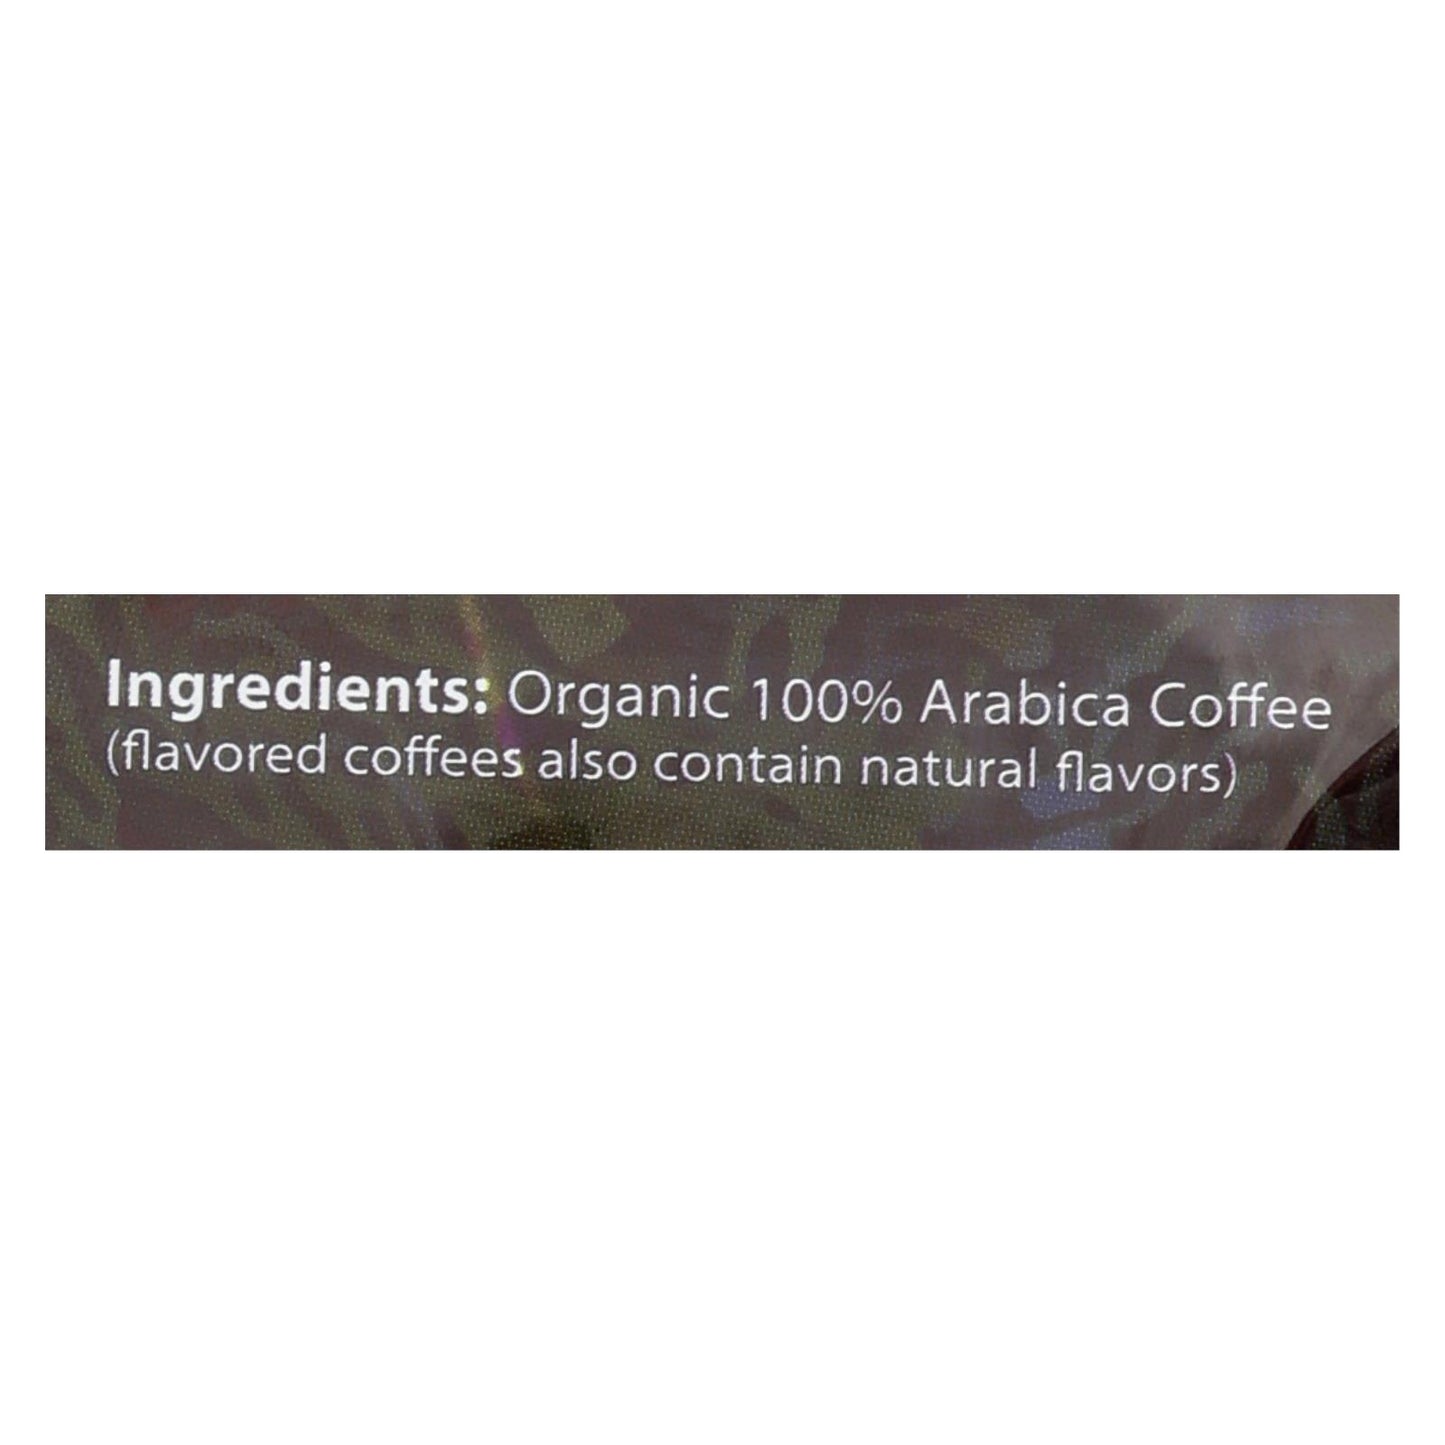 Organic Coffee Coffee - Organic - Ground - French Roast - 12 Oz - Case Of 6